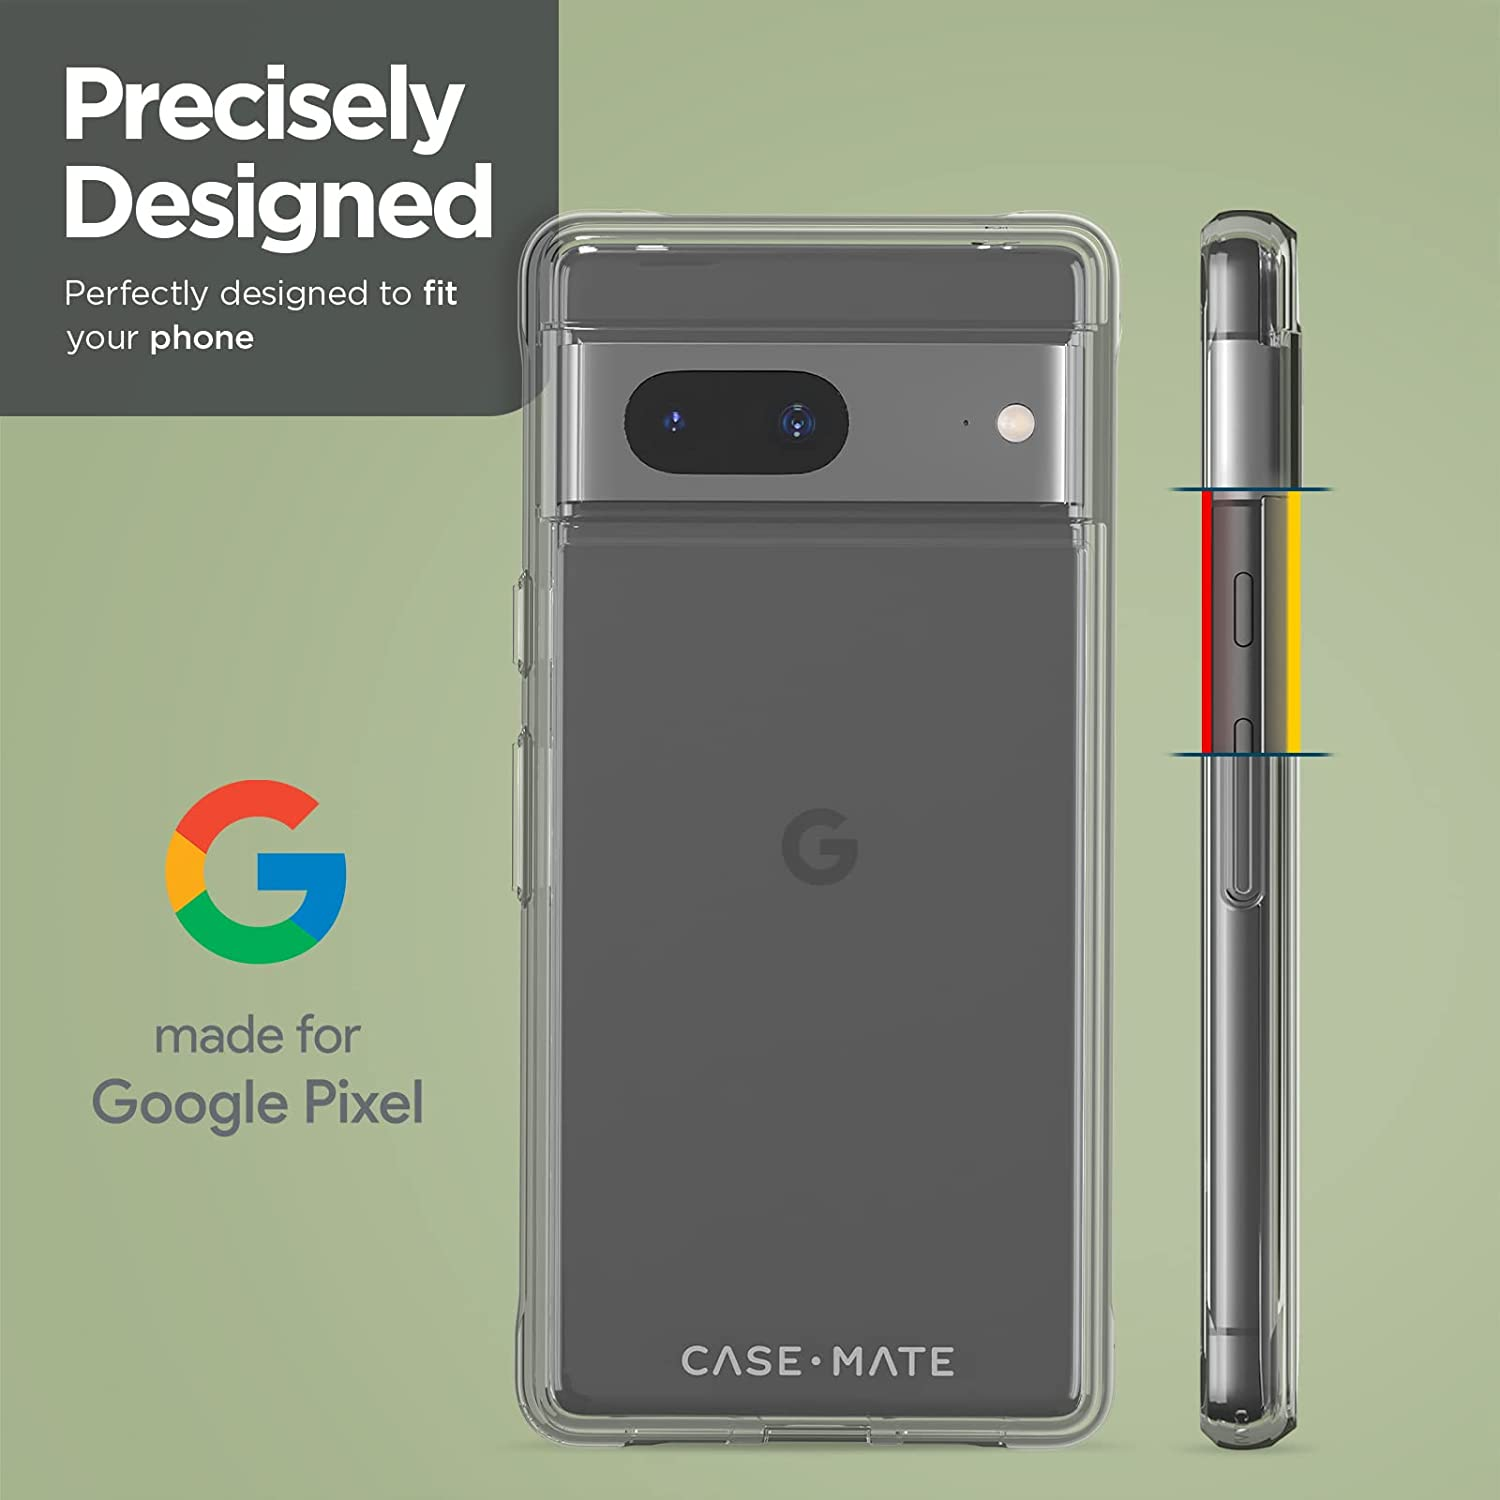 CASE-MATE Tough Backcover, Google, Transparent Clear, 7a, Pixel